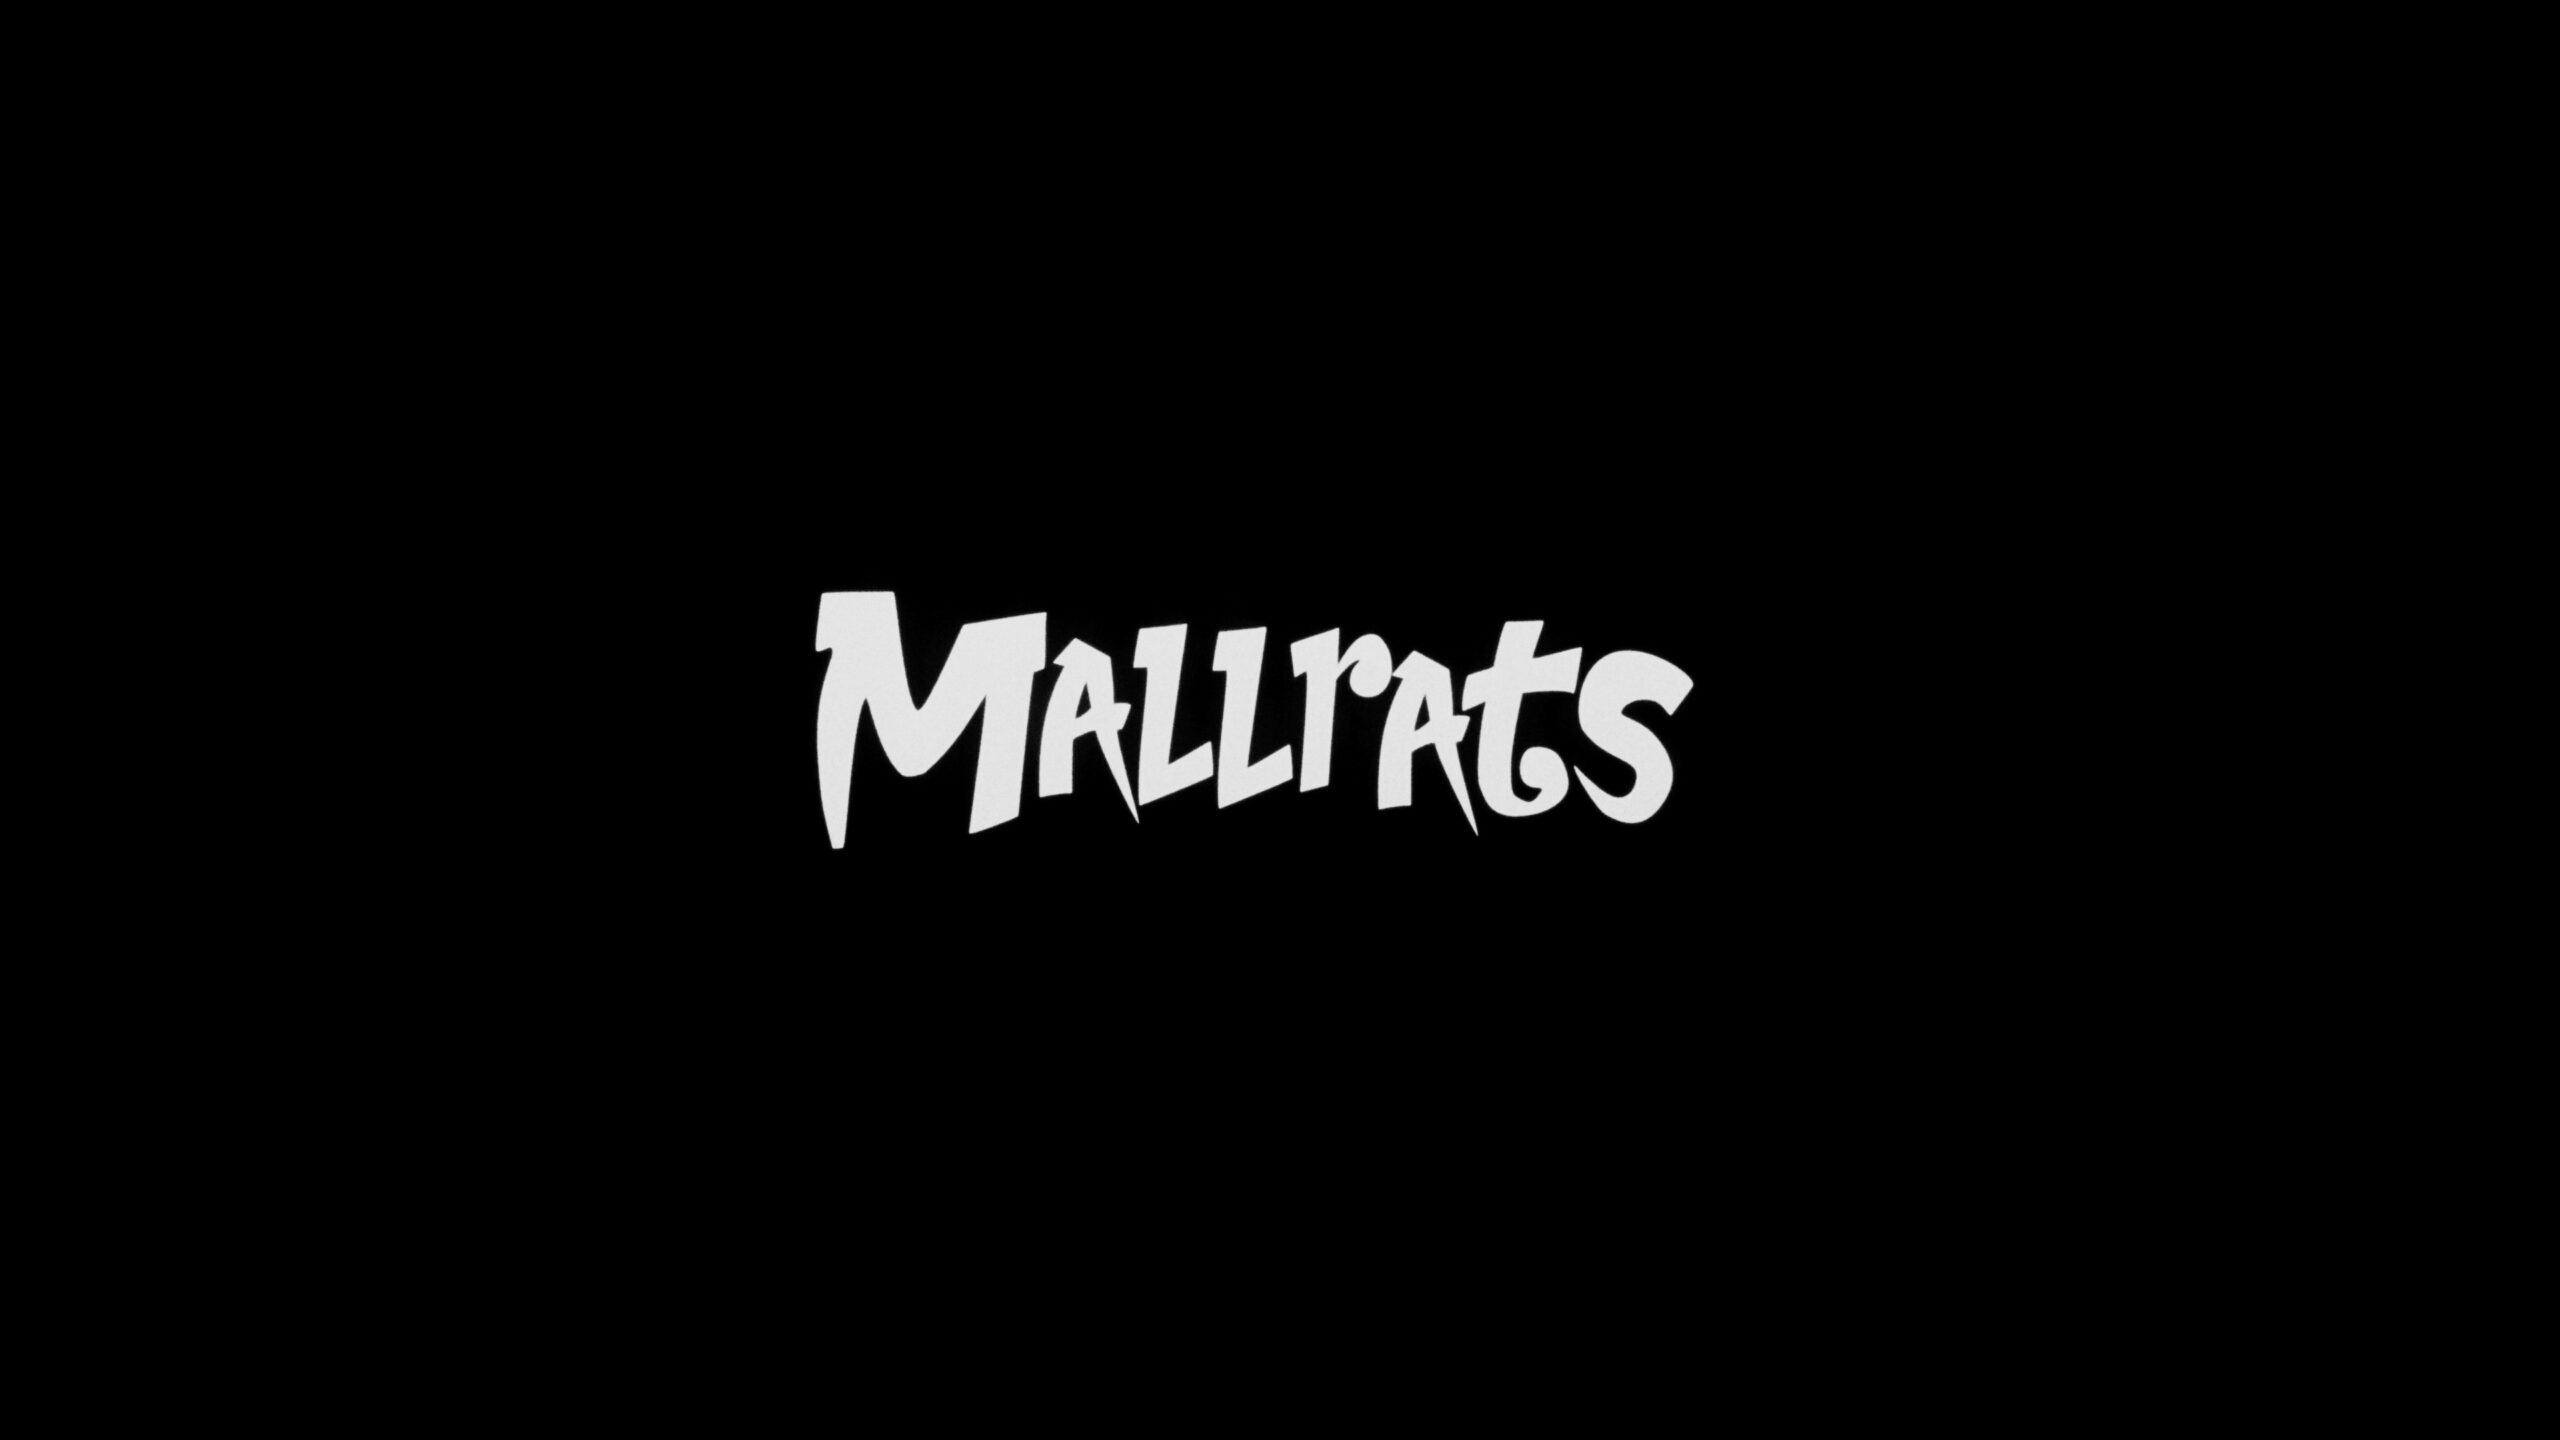 Mallrats (1995) [Arrow 4K UHD review] 18